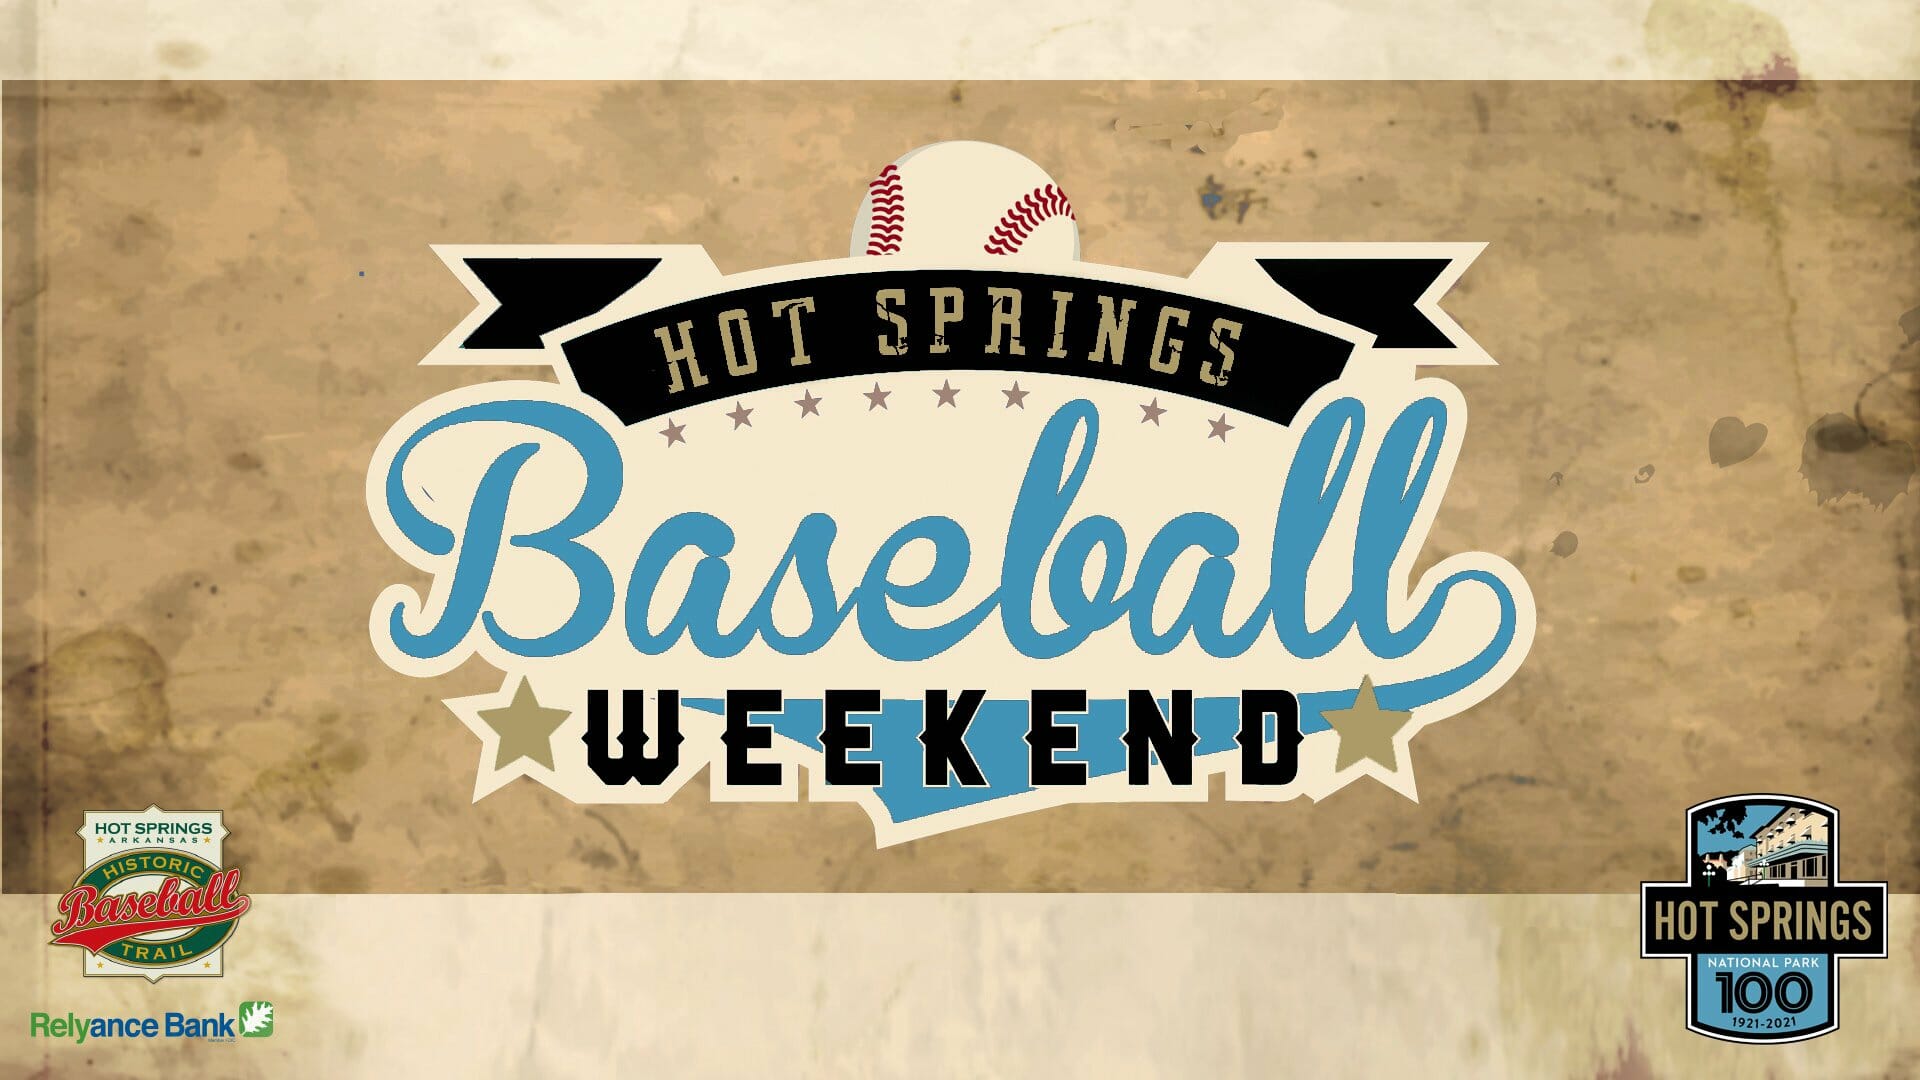 Dale Murphy Headlines Hot Springs Baseball Weekend - Only In Arkansas